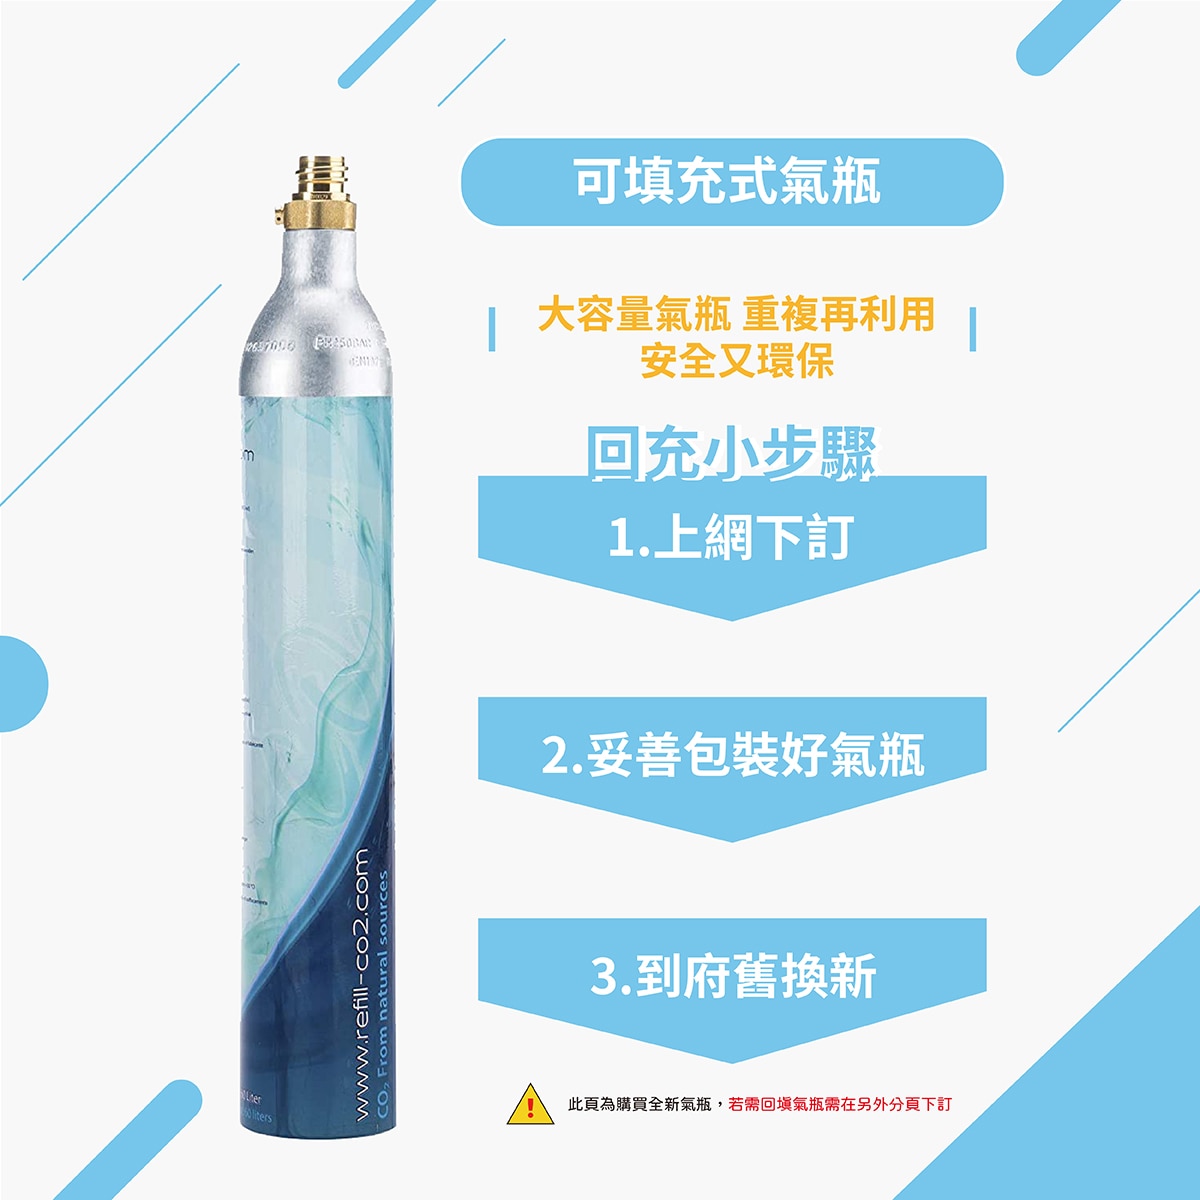 LEVIVIO 二氧化碳可填充氣瓶回充步驟說明，大容量氣瓶，重複再利用，環保又安全。